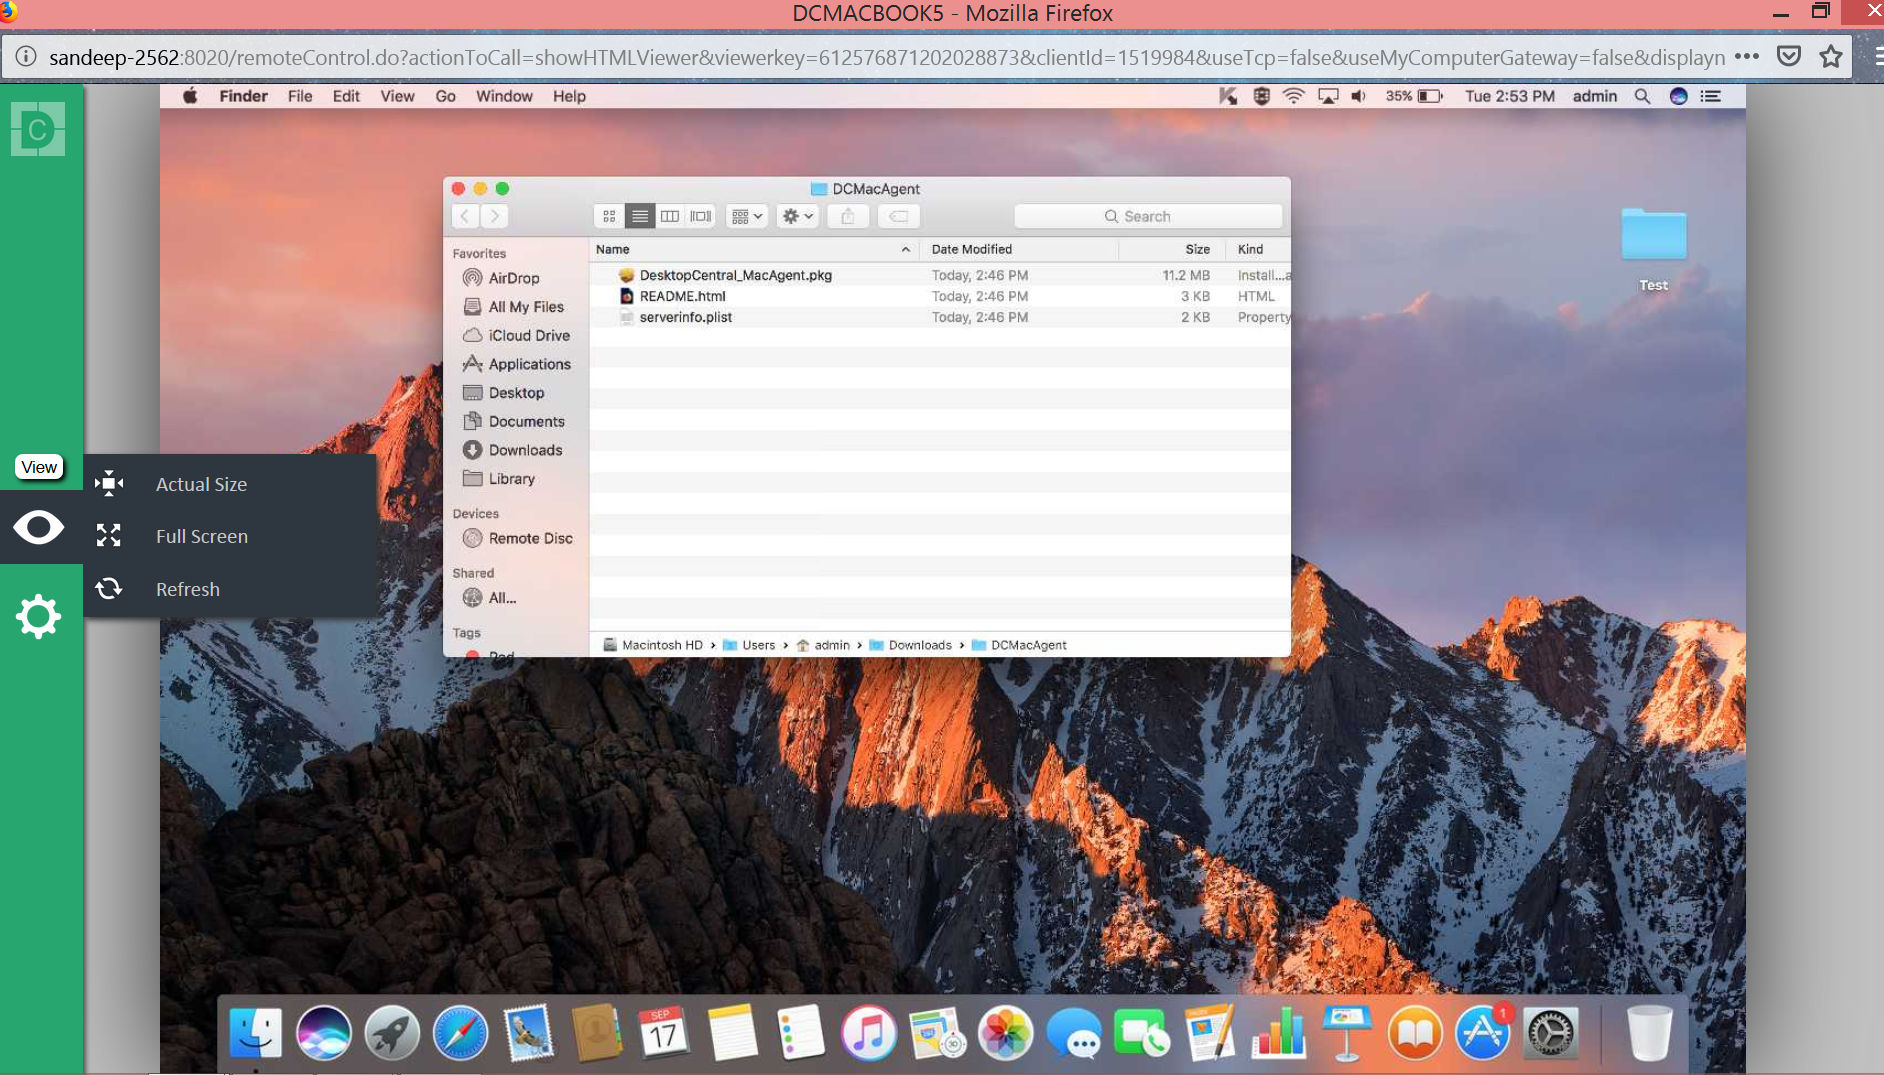 Github Version For Mac Os X Lion